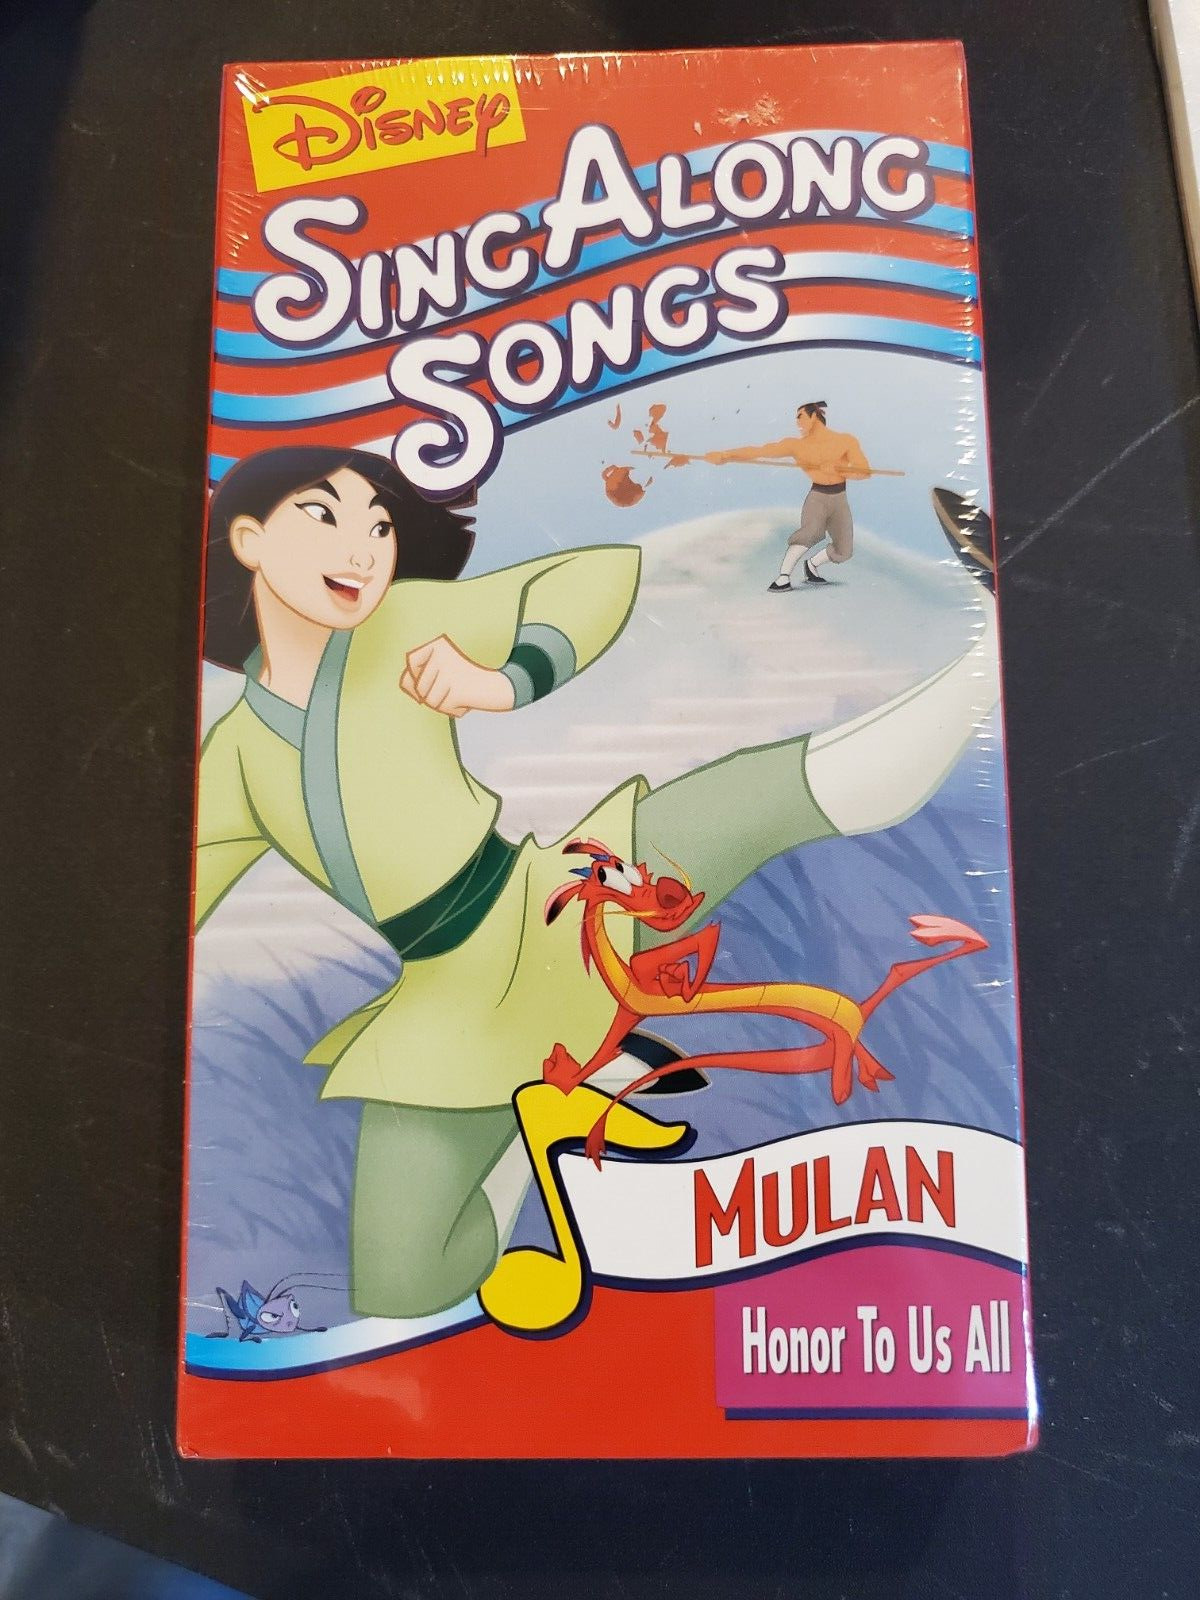 Rare NEW Sealed DISNEY Sing Along Songs VHS Tape MULAN Honor To Us All